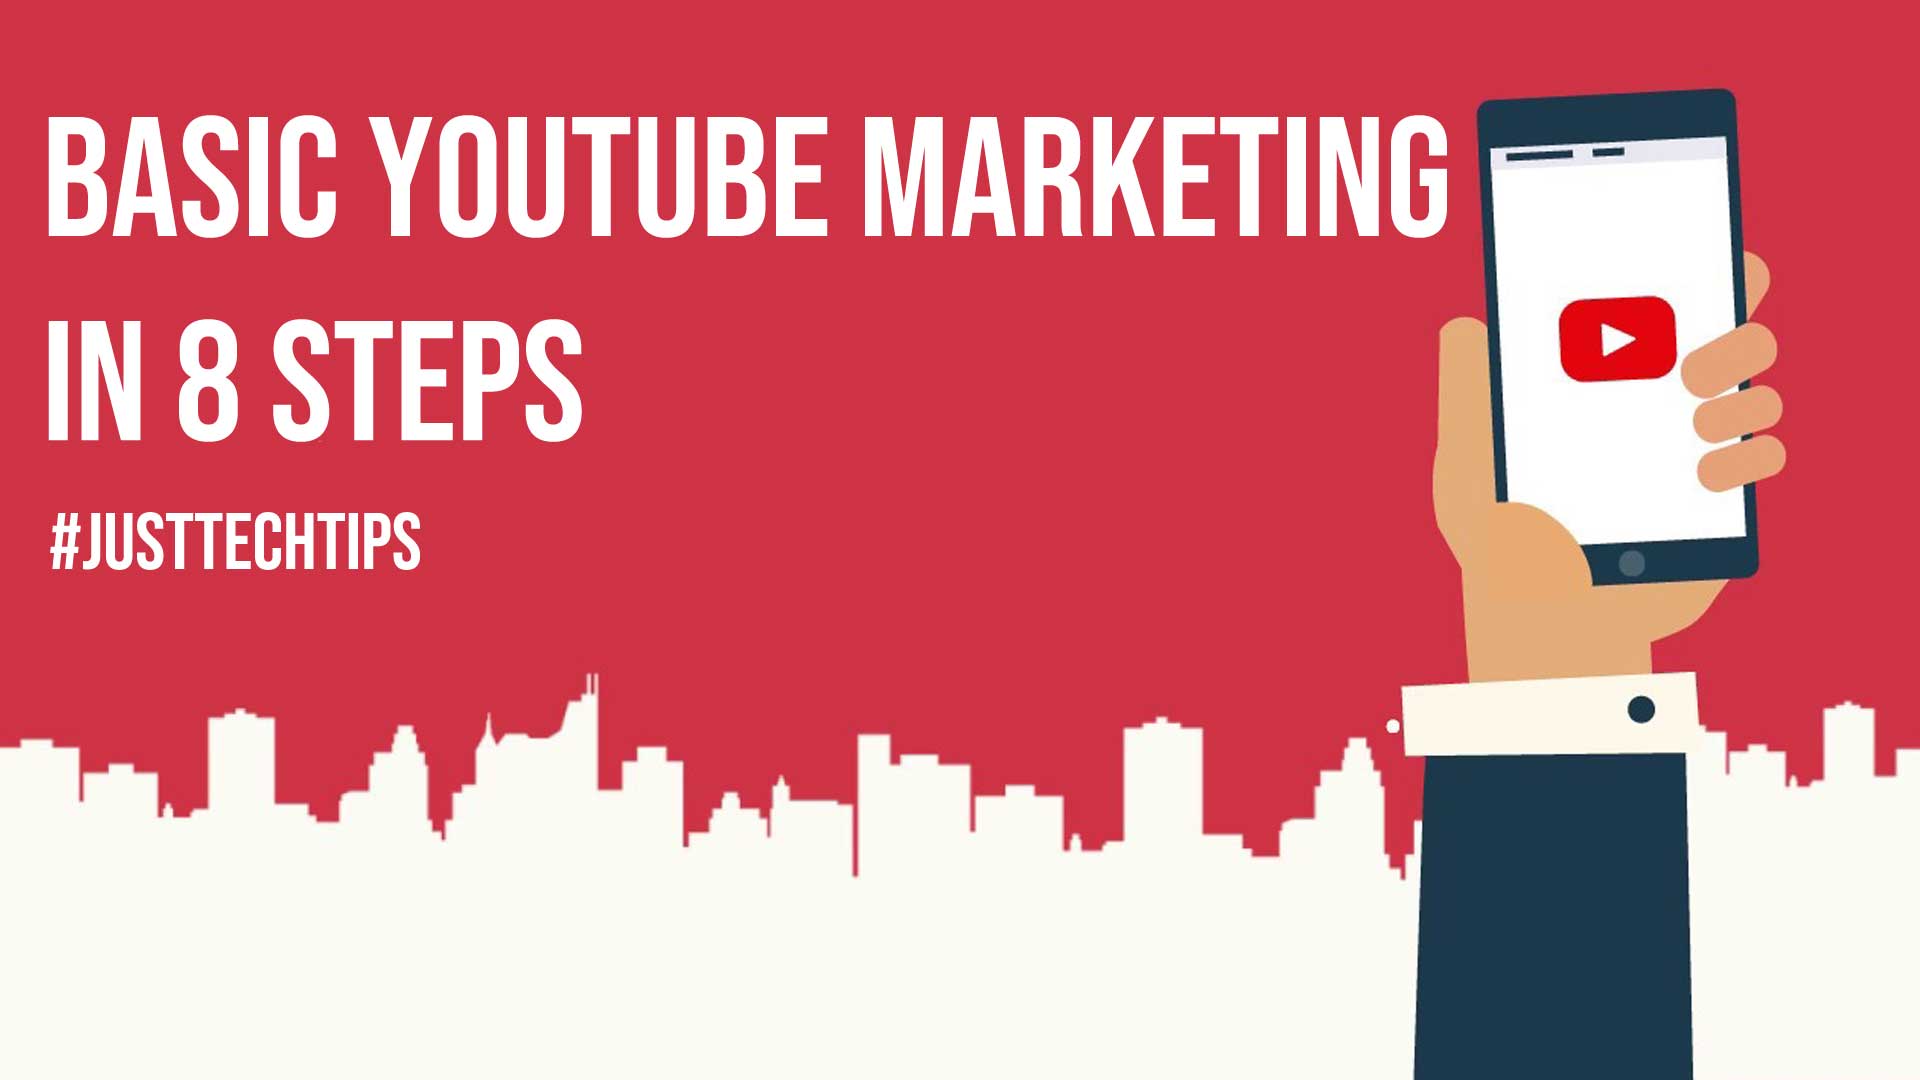 Basic Youtube Marketing in 8 steps